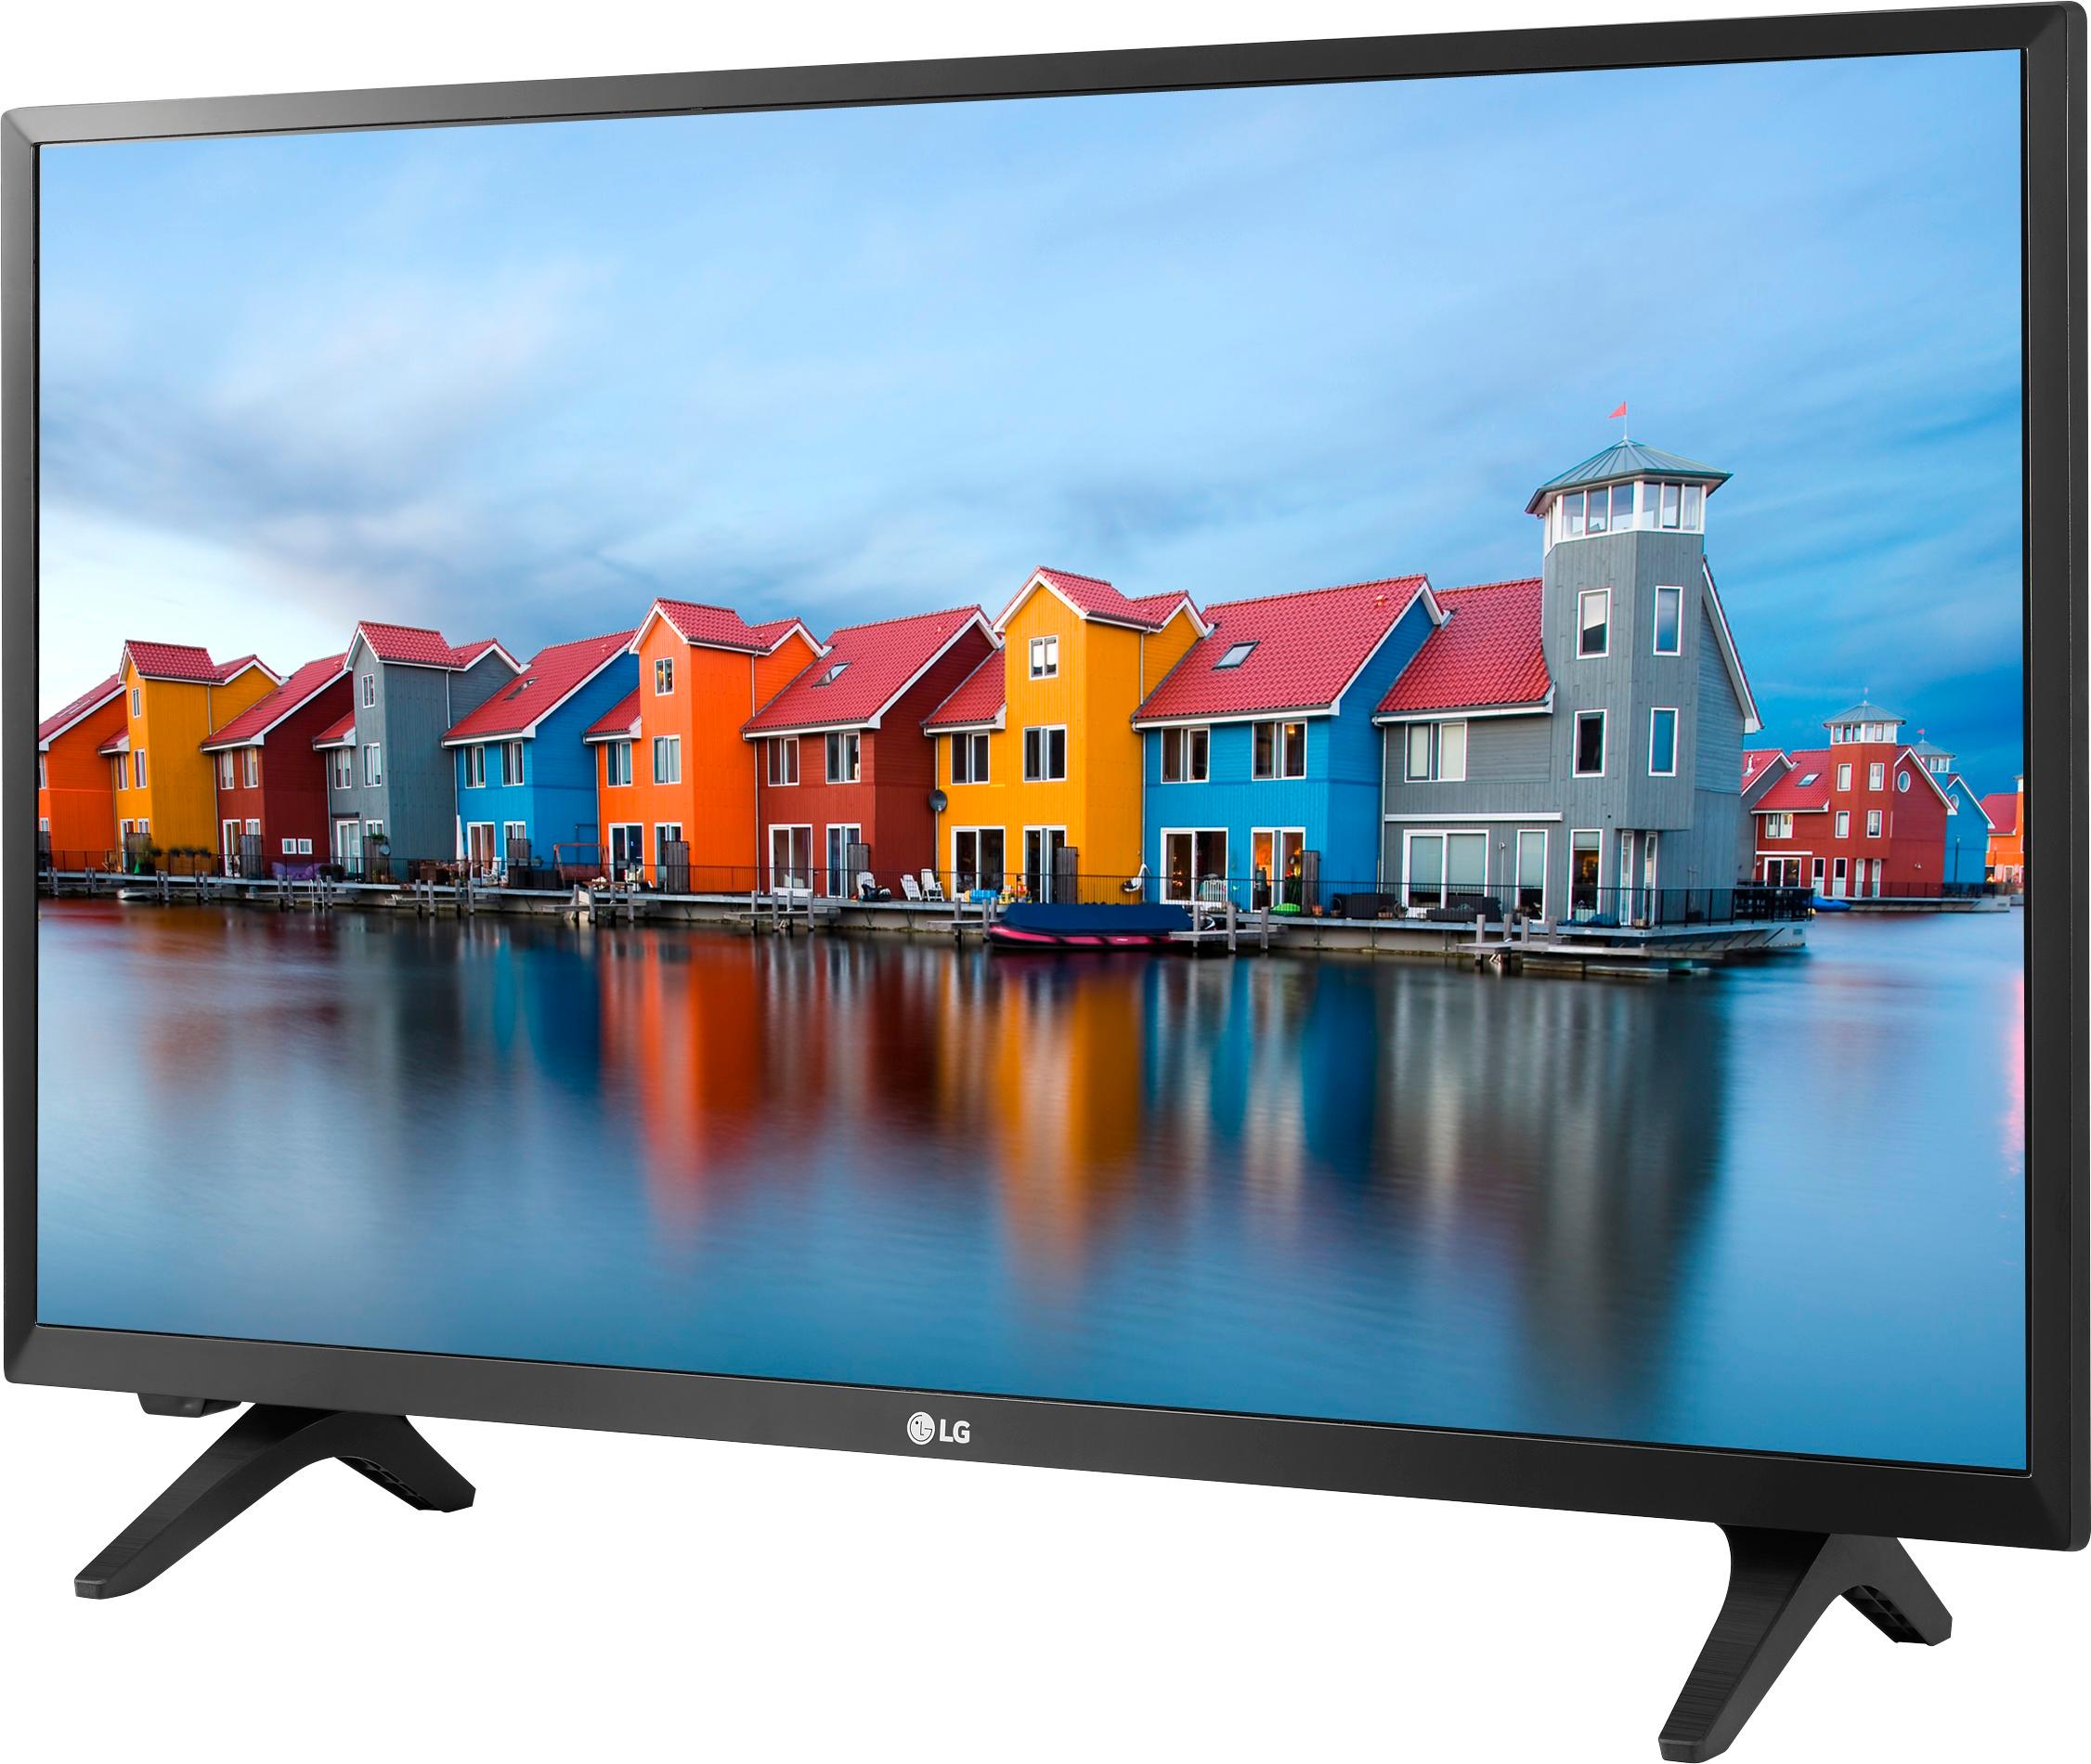 Best Buy: LG 28 Class LED HD TV 28LM400B-PU